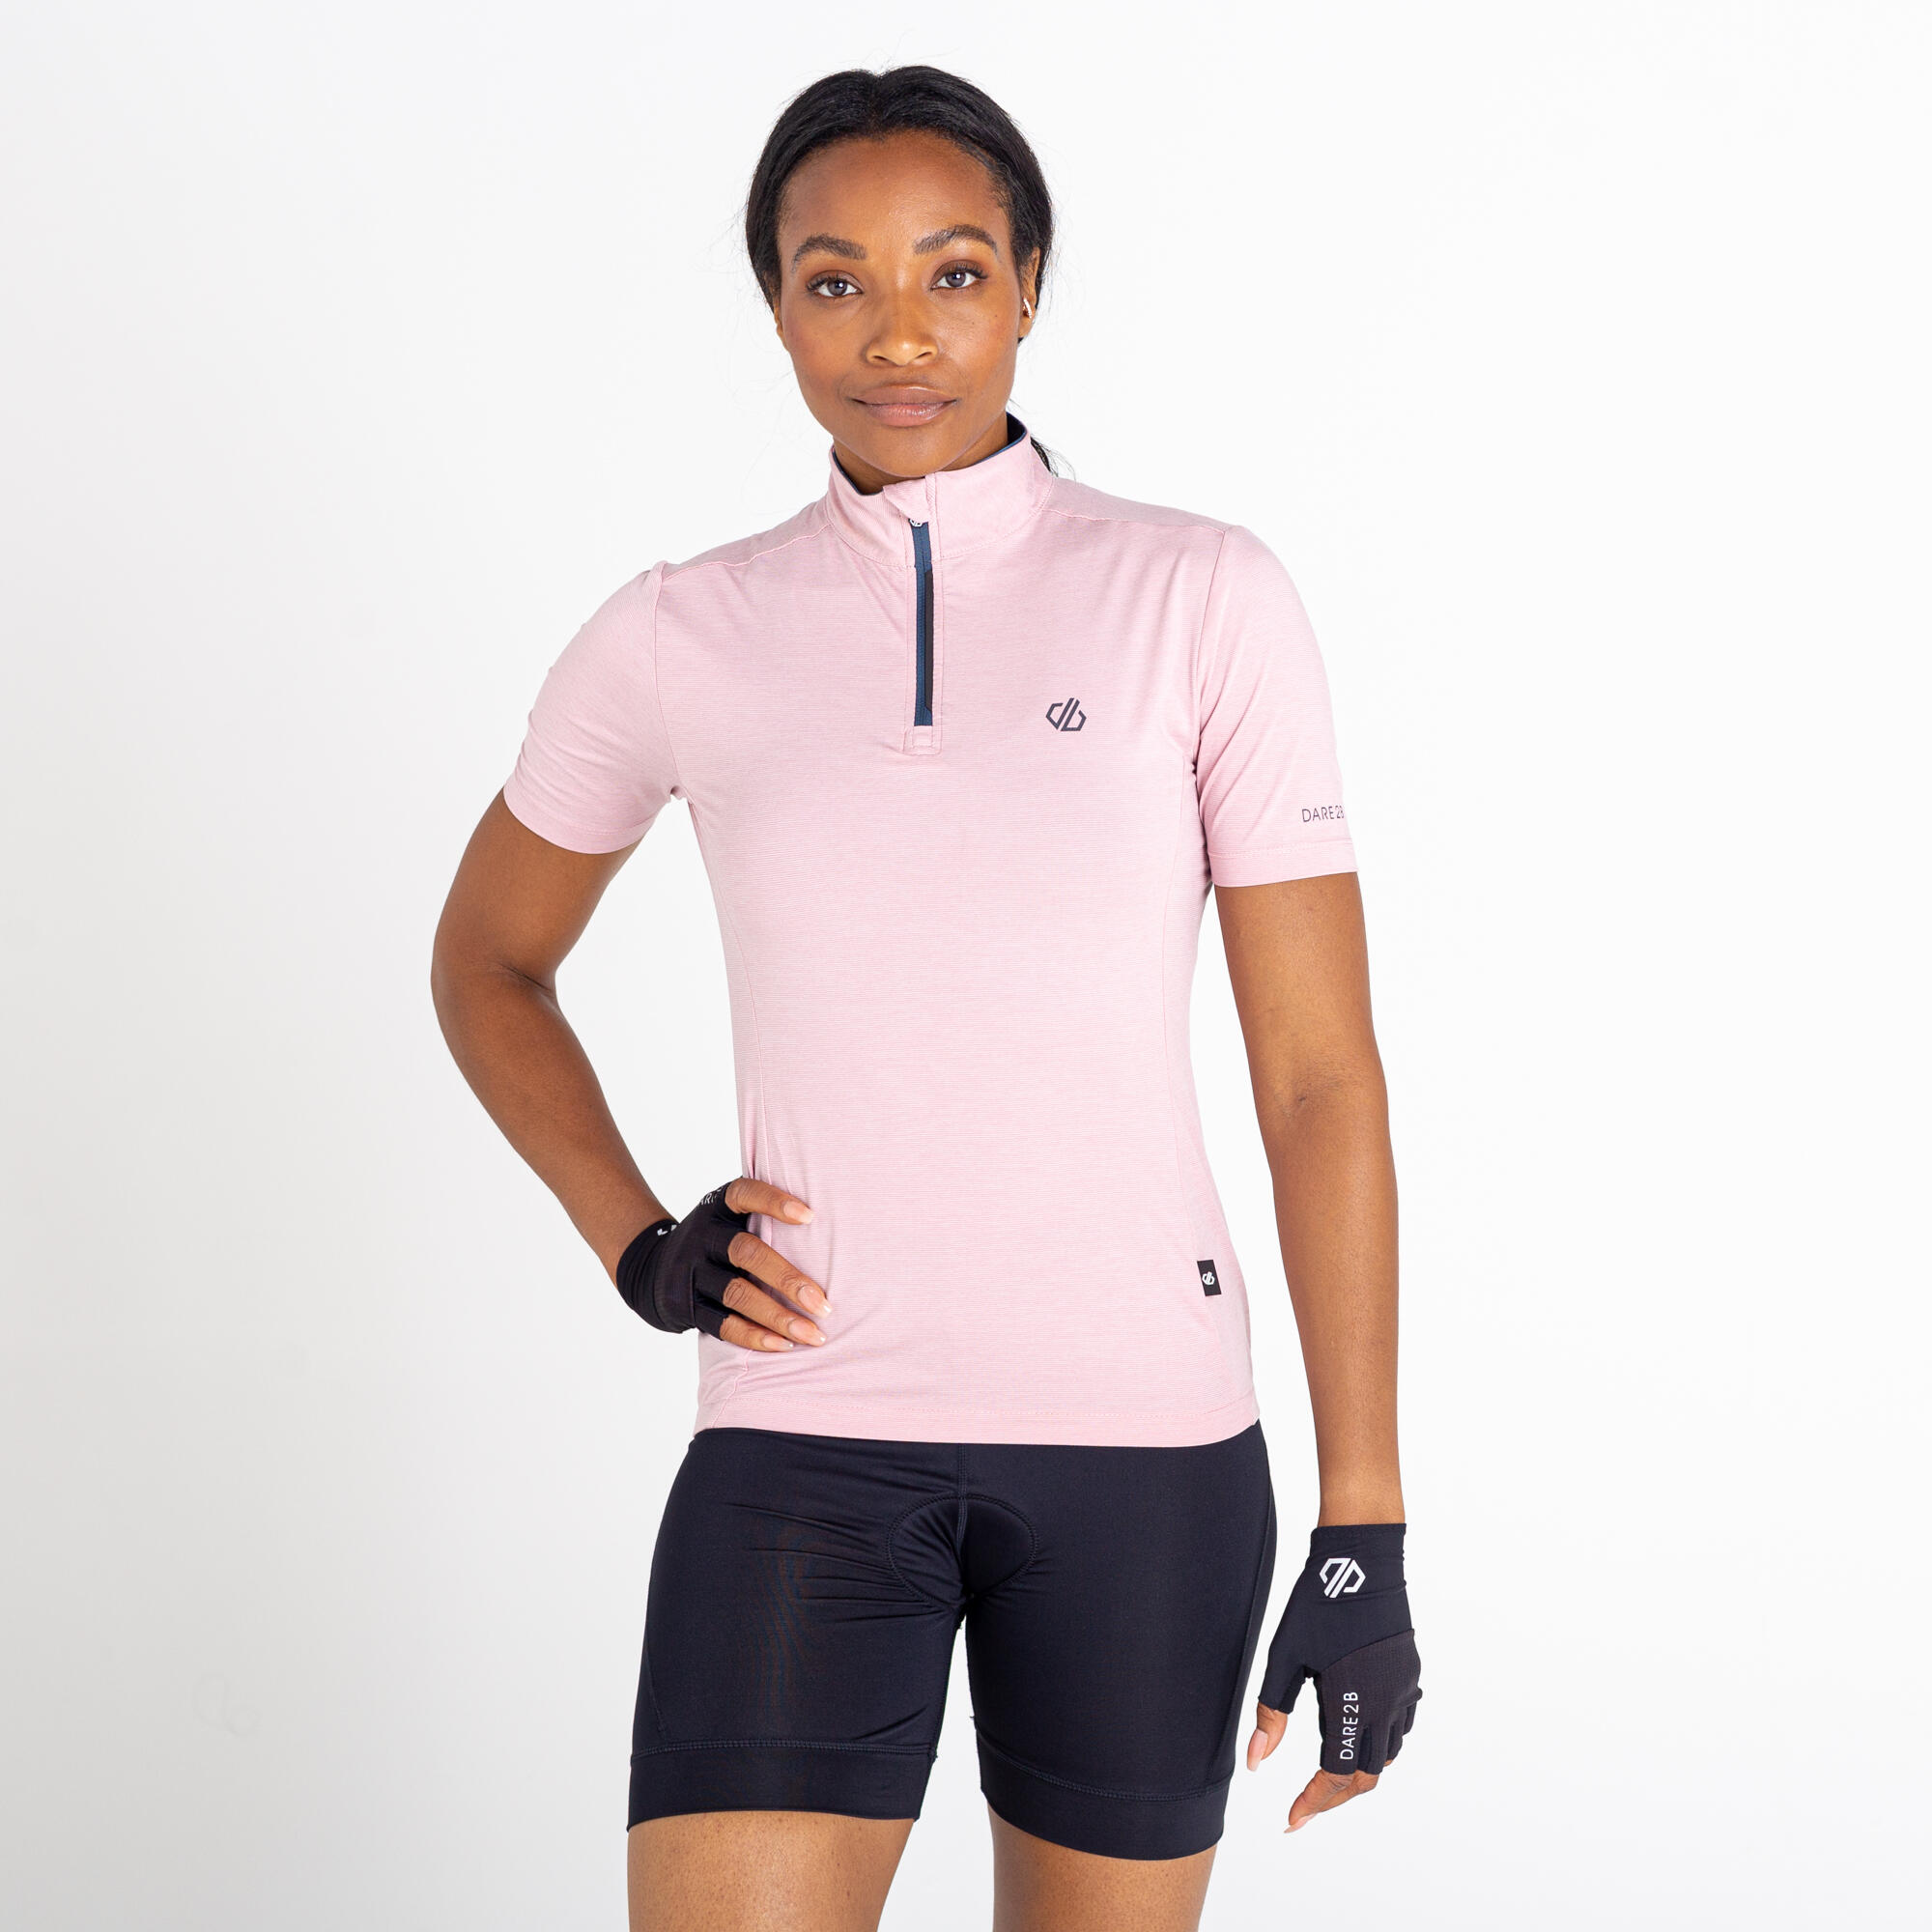 Pedal Through It Women's Fitness Short Sleeve 1/2 Zip Jersey - Powder Pink 4/6